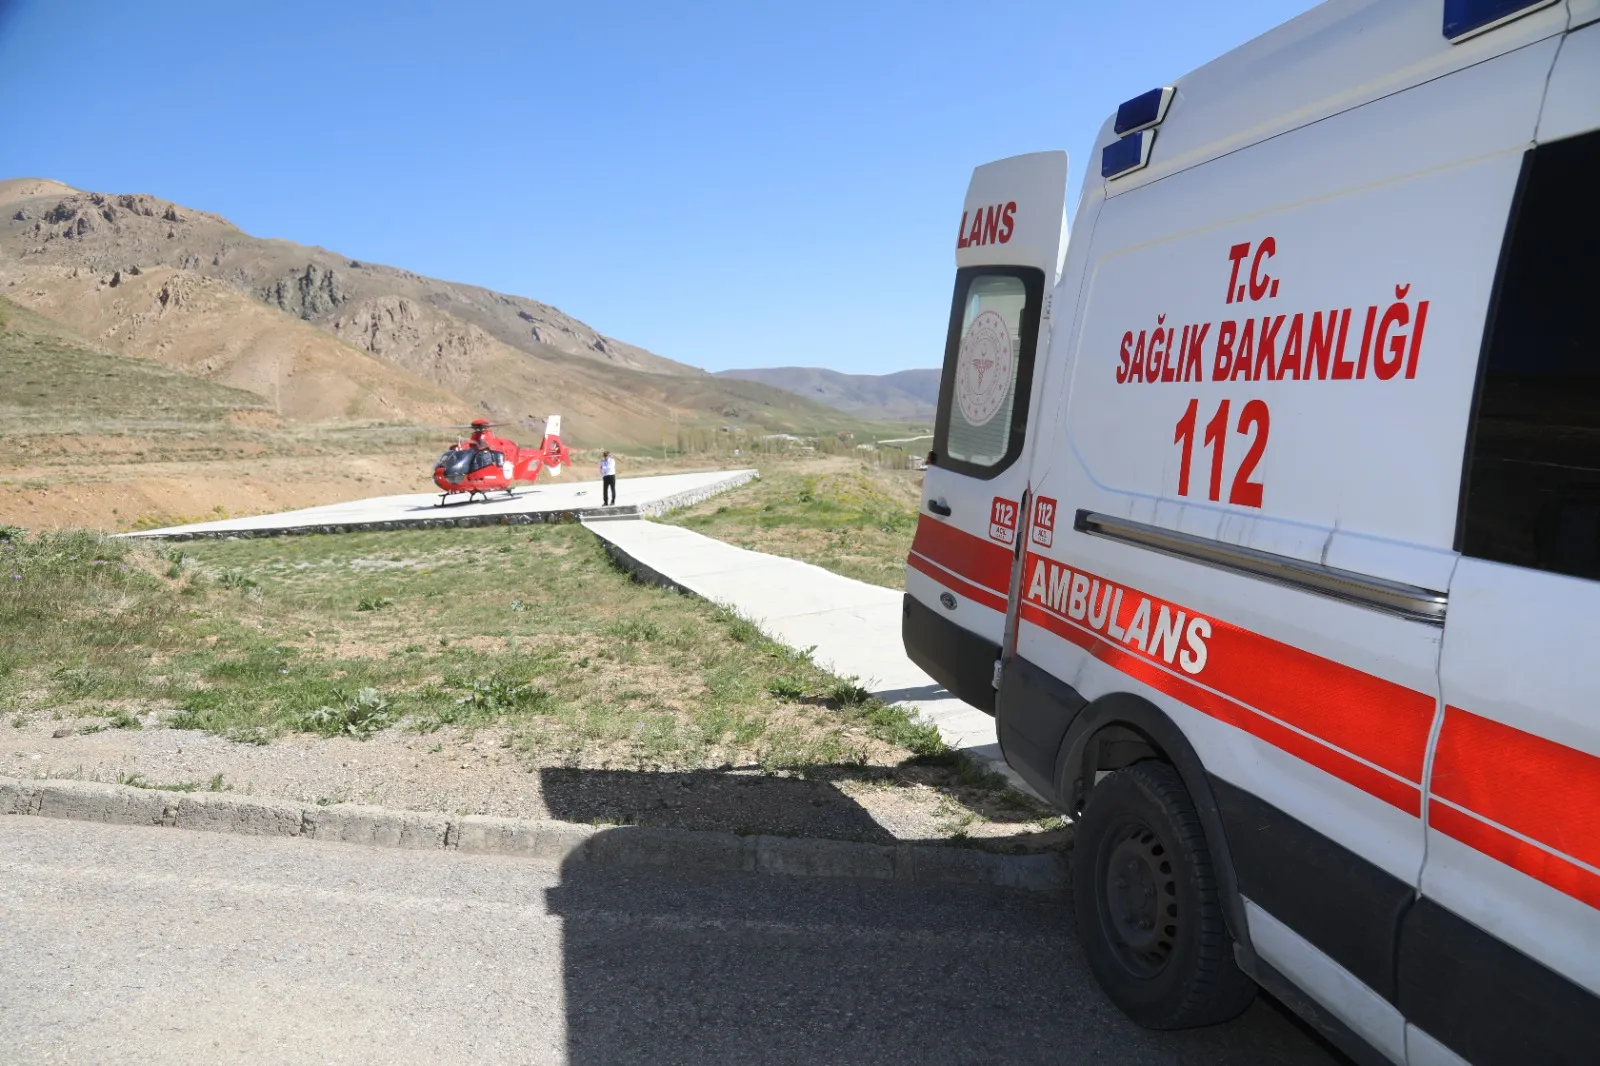 vanda kalp krizi geciren hastaya ambulans helikopterle sevk 0